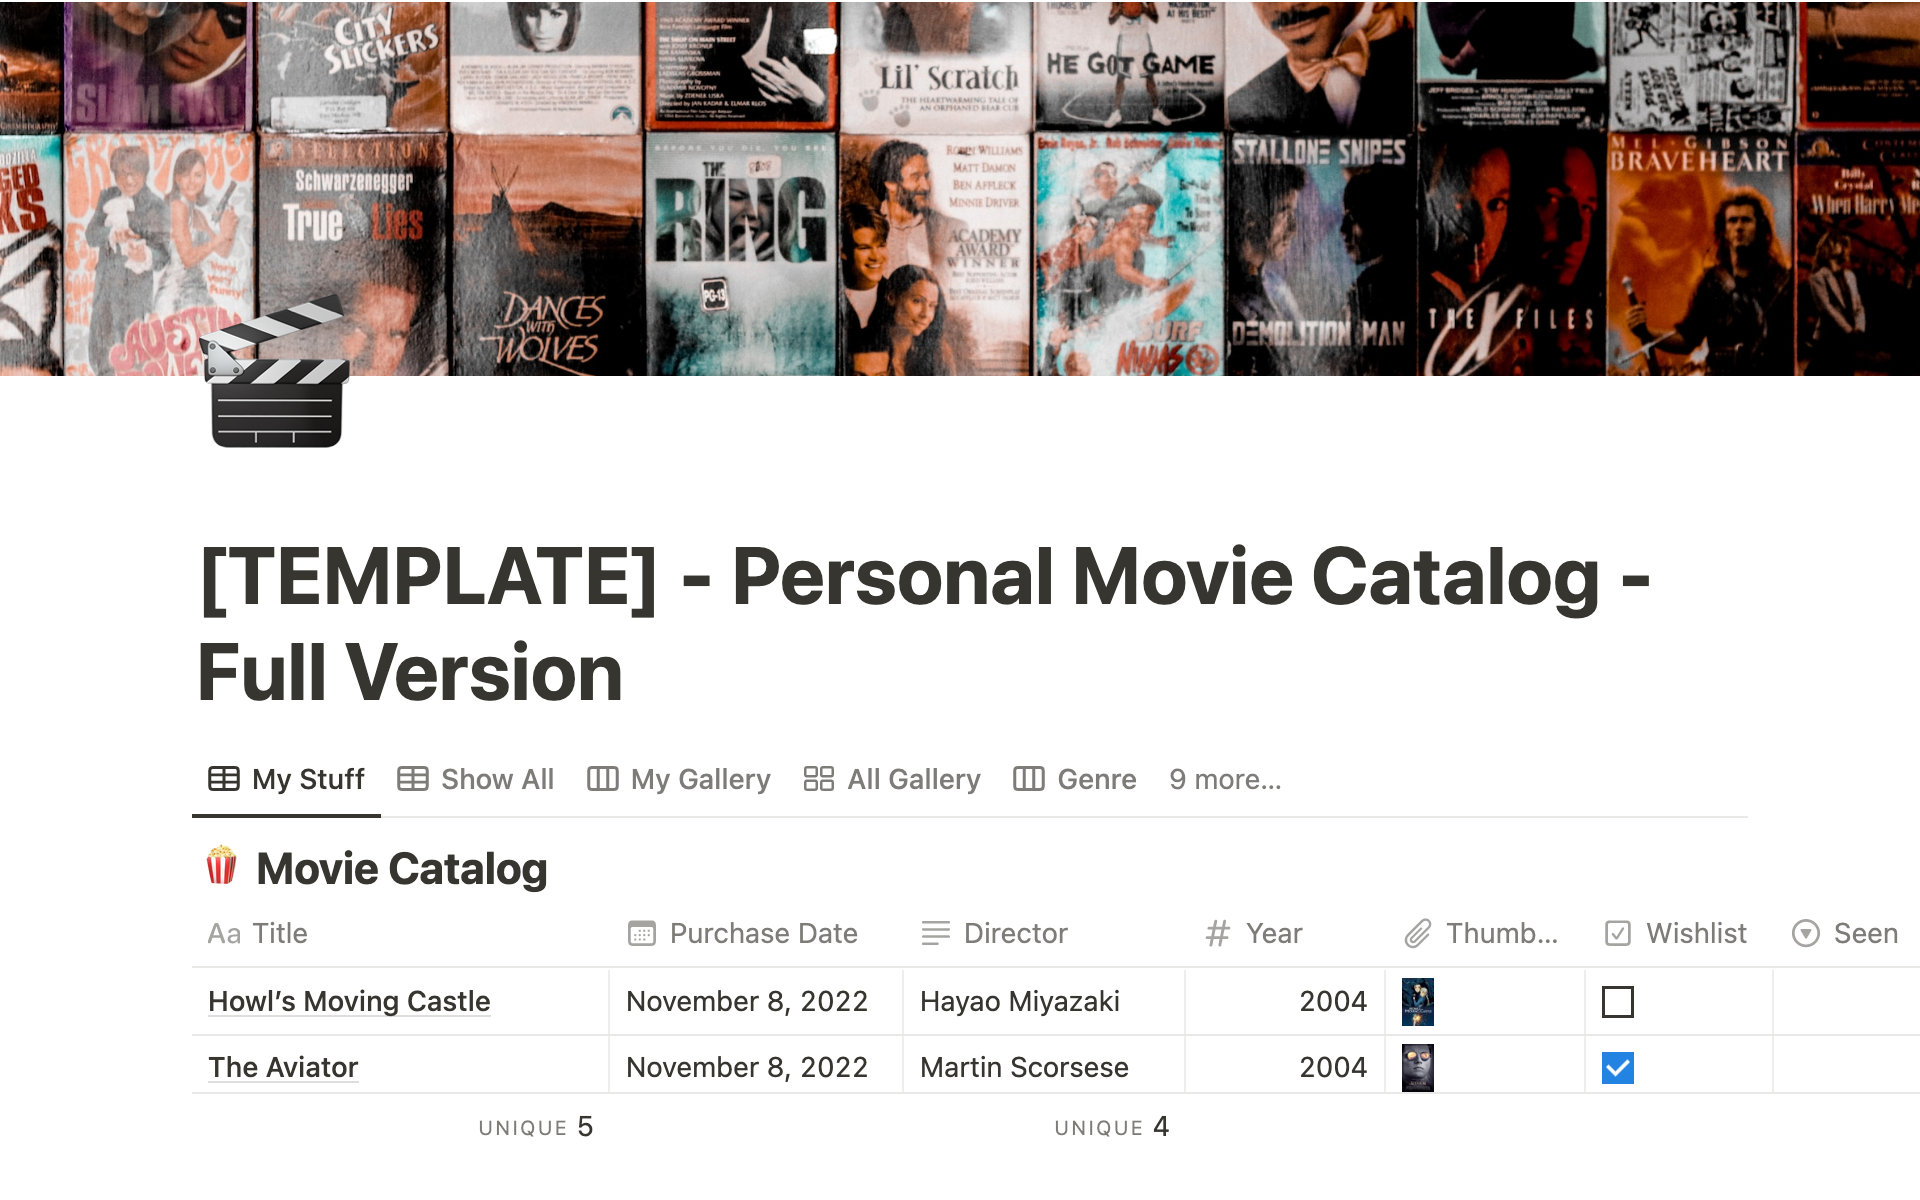 Vista previa de plantilla para Personal Movie Catalog